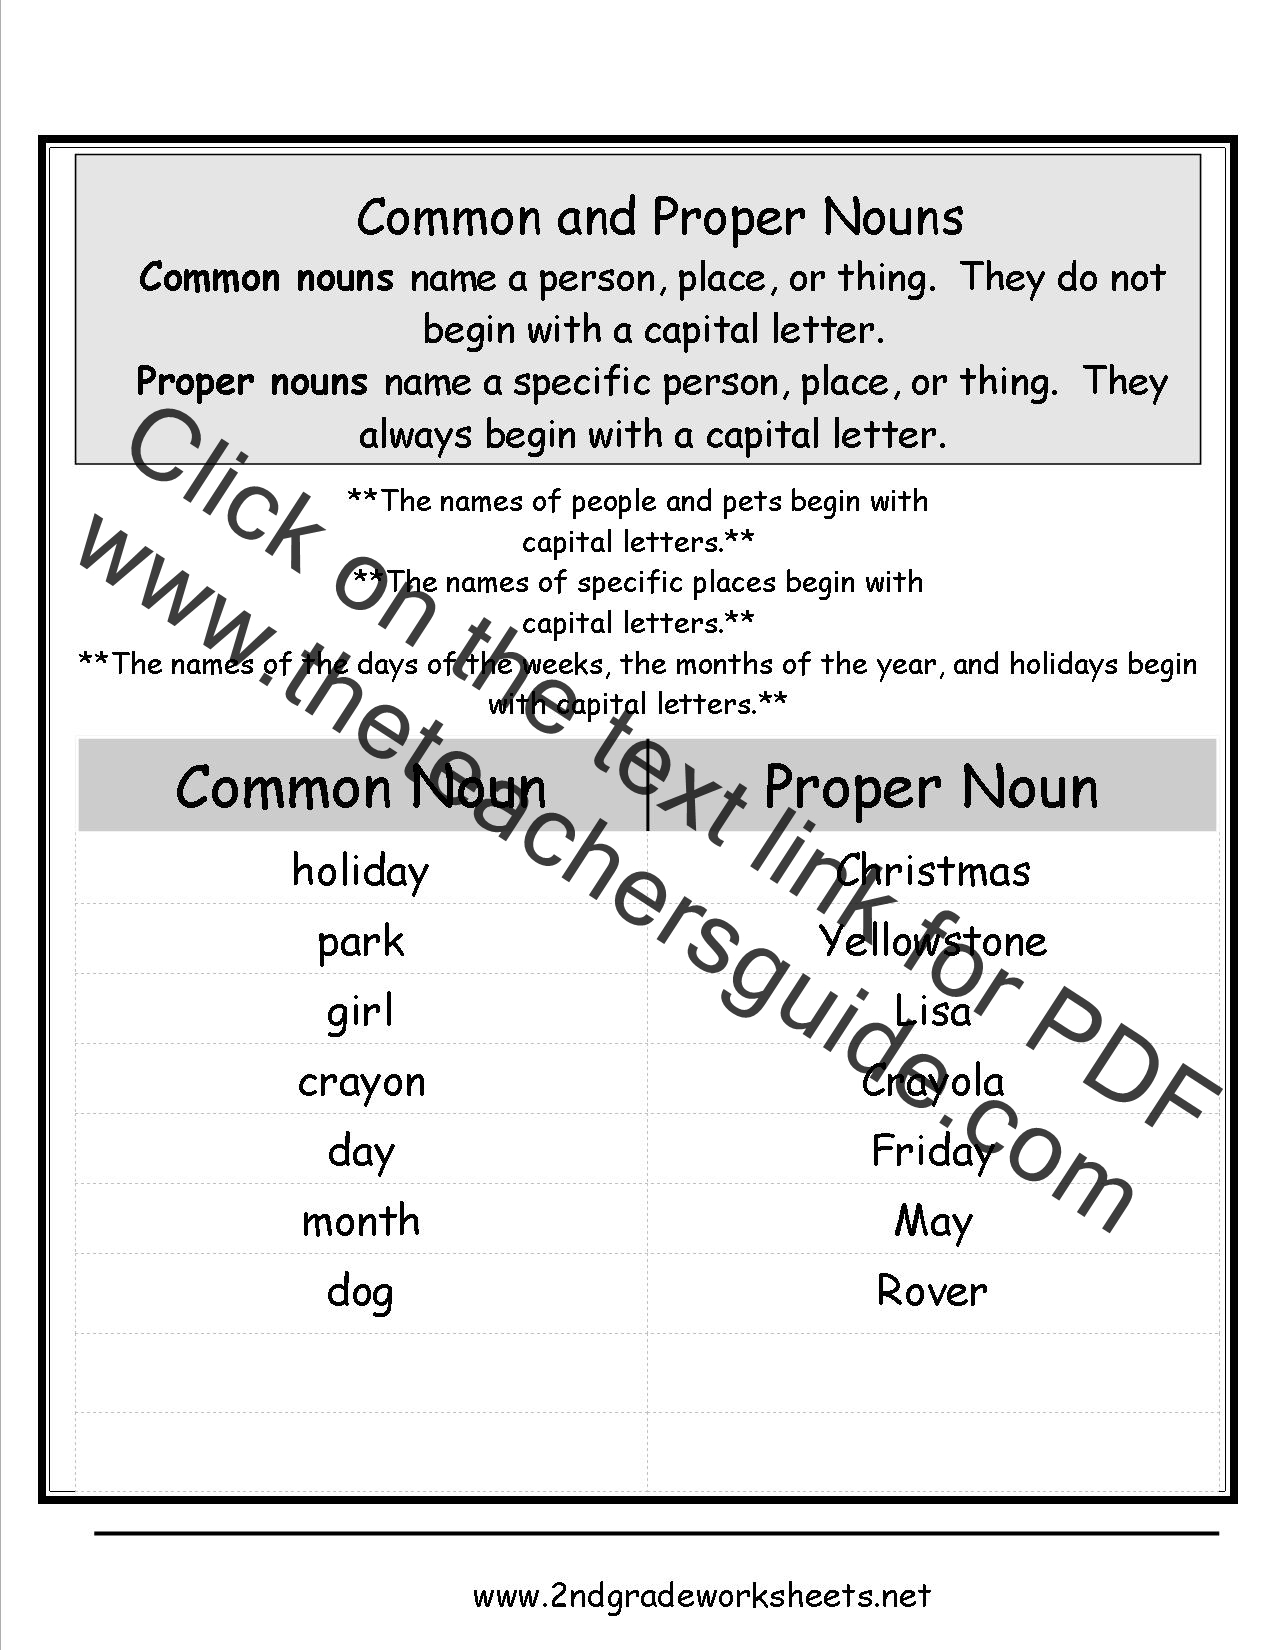 Common and Proper Nouns Worksheet For Proper Nouns Worksheet 2nd Grade